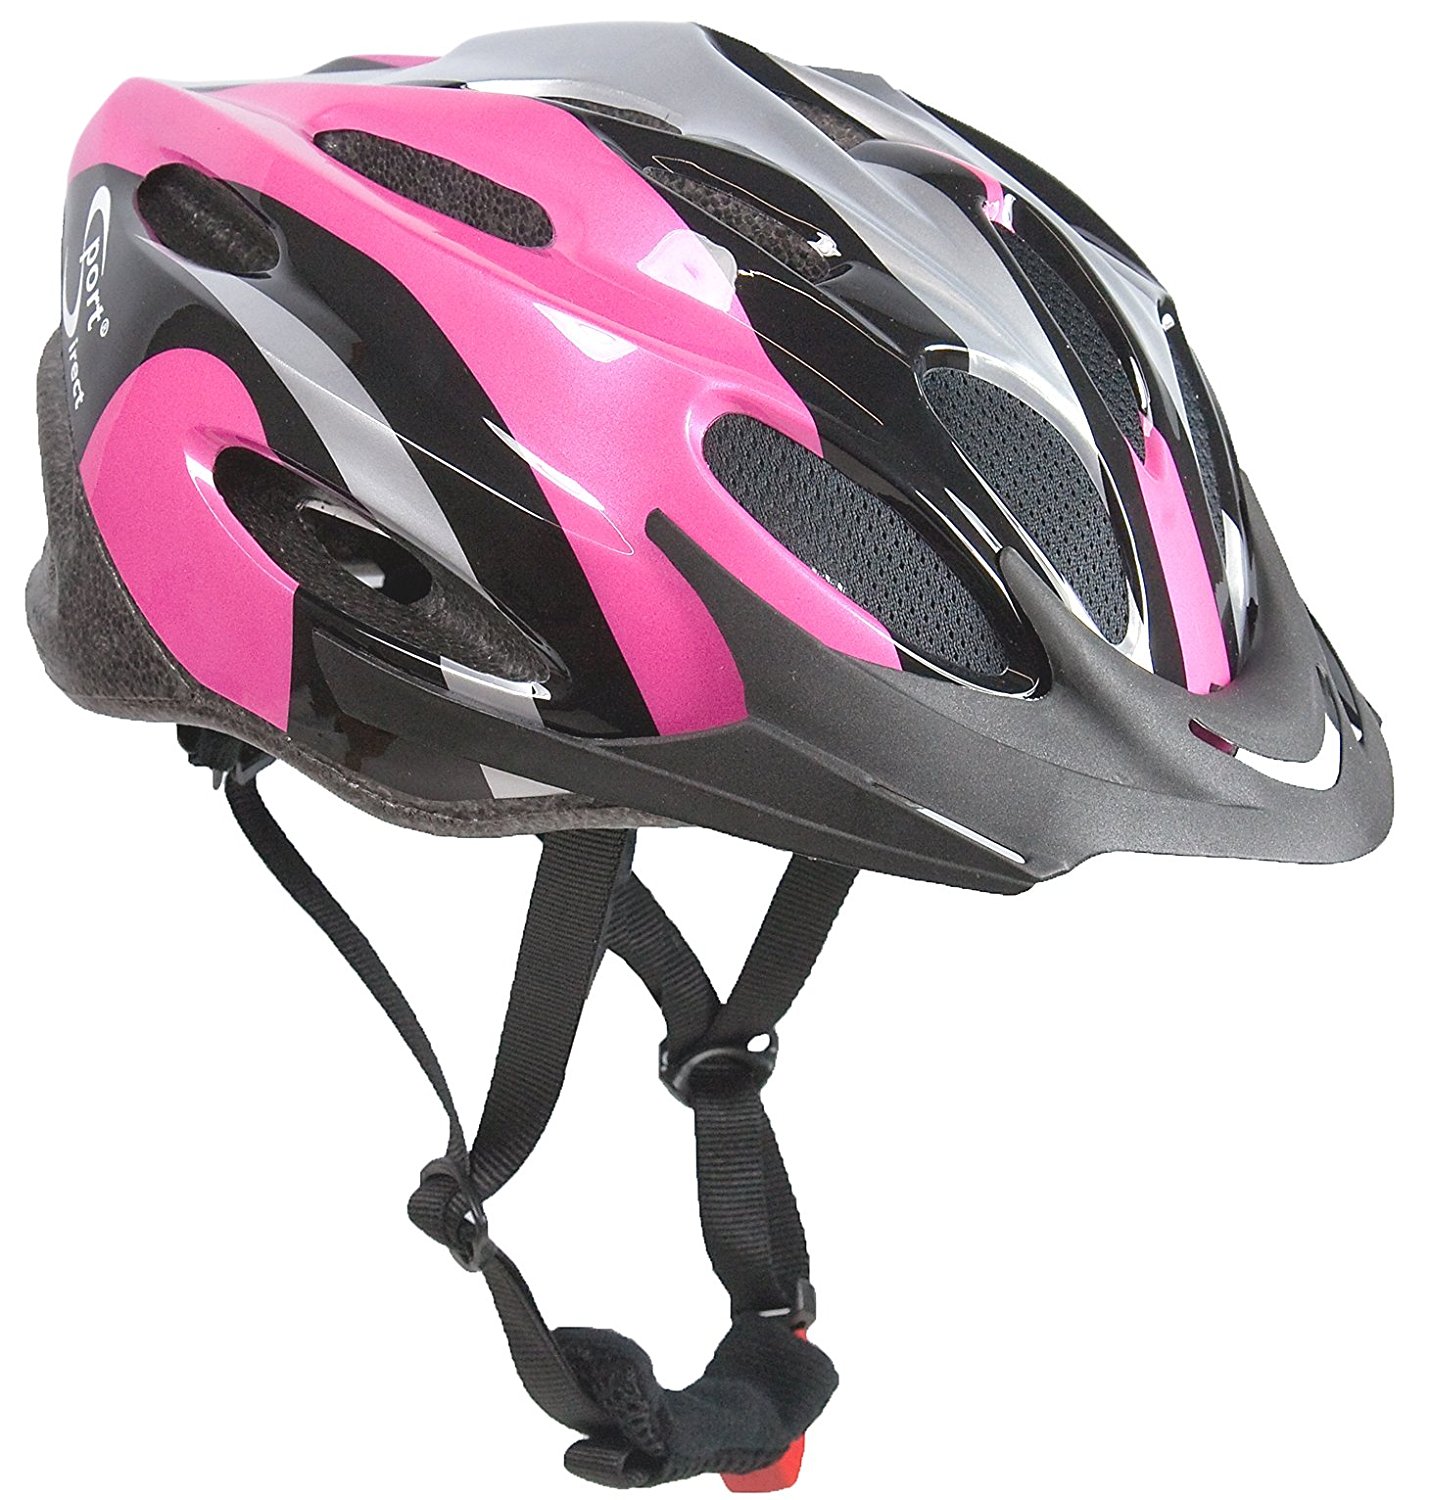 Amazon.com : Sport Direct Women's Vapour Bicycle Helmet - Pink/Black ...